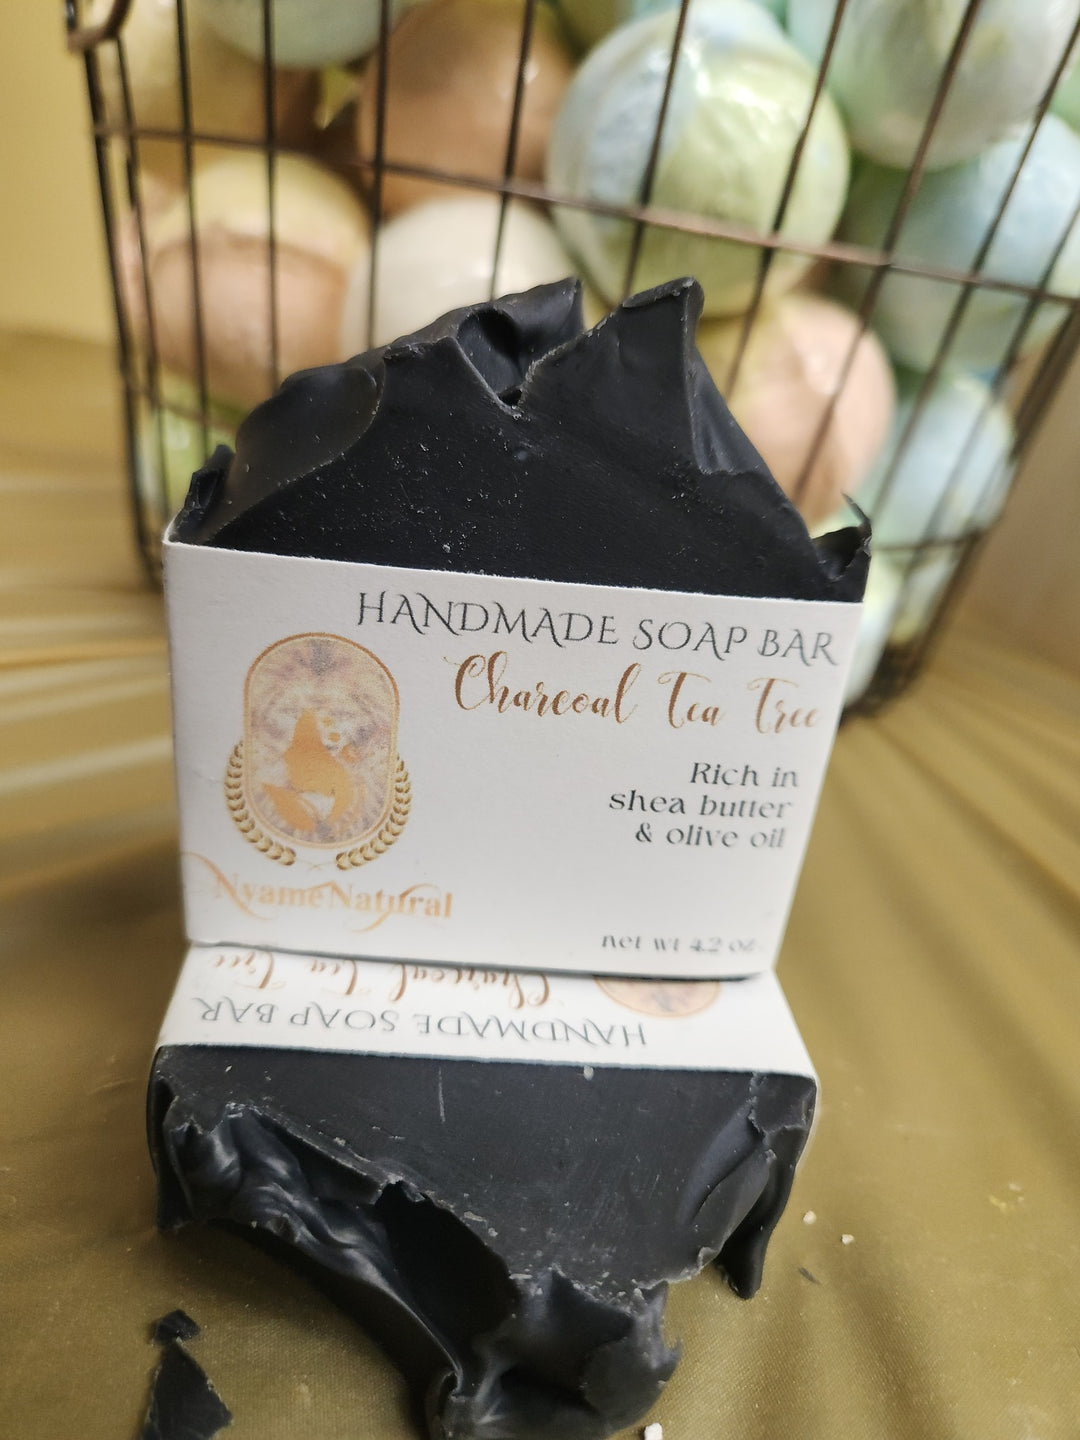 Charcoal Tea tree soap bar